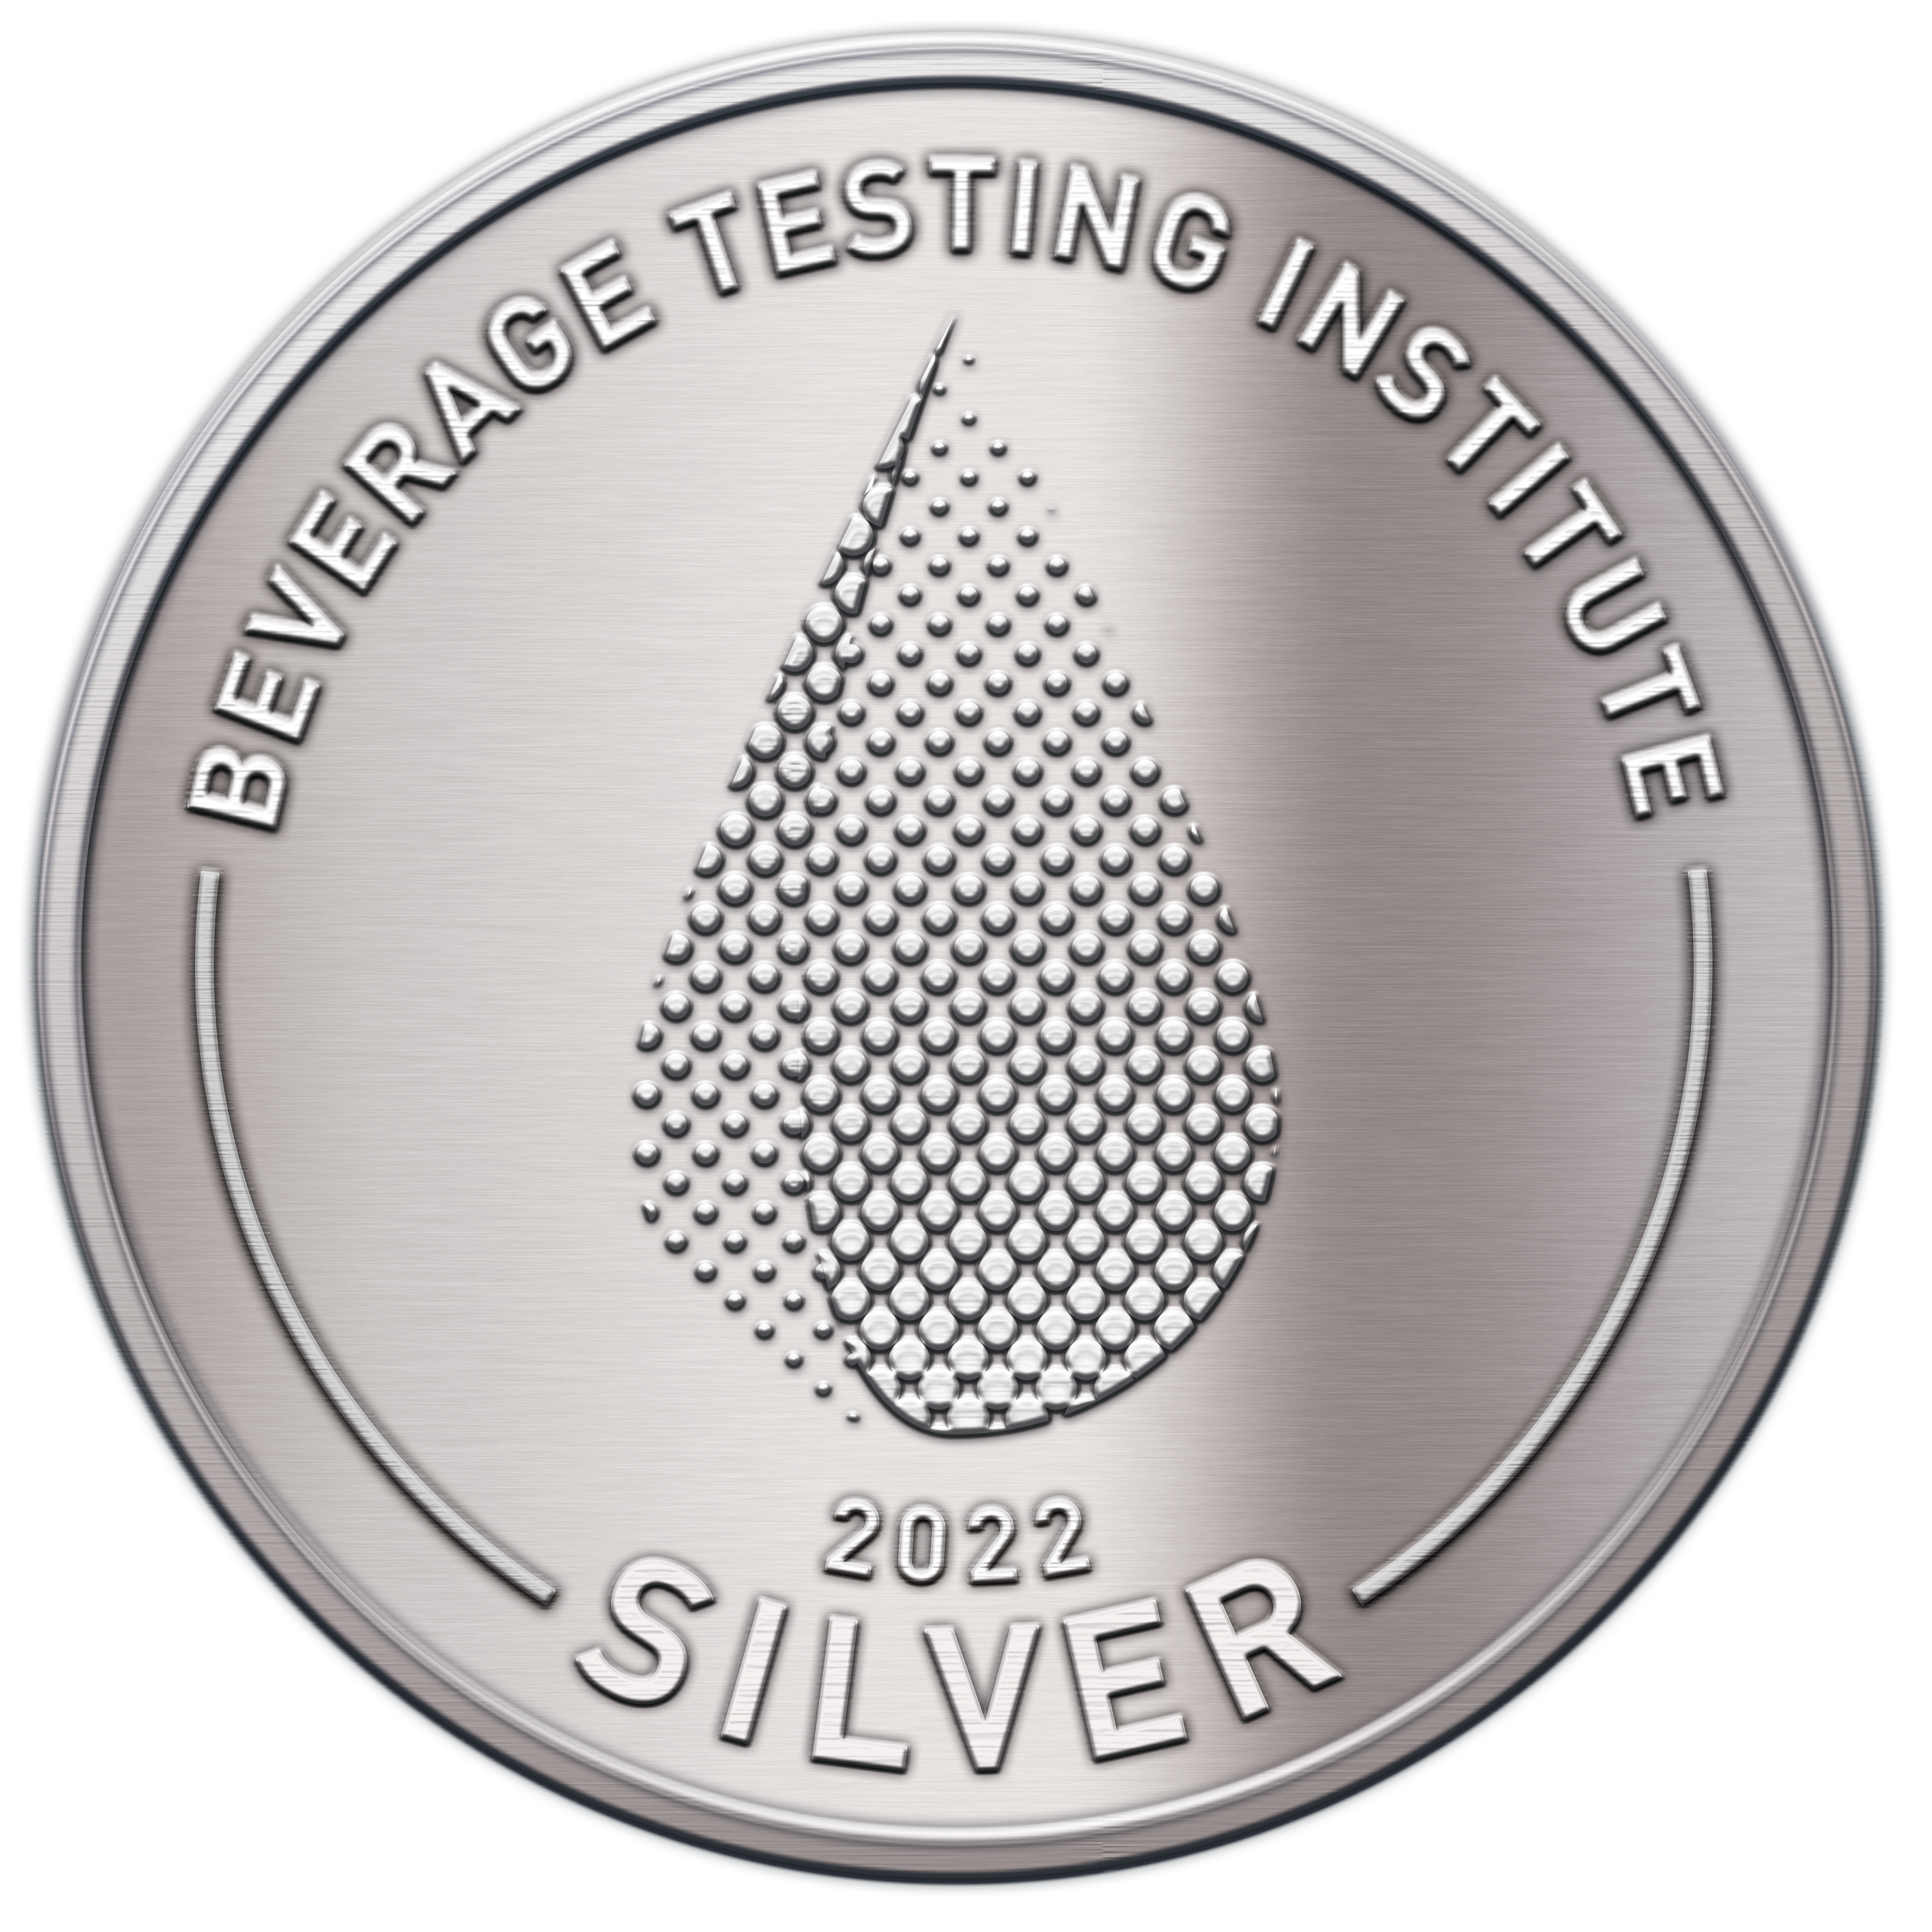 BTI-Silver-Medal-Streeter-Flynn-Sugar-Cane-Vodka-USA-03-01-2022-6082.png